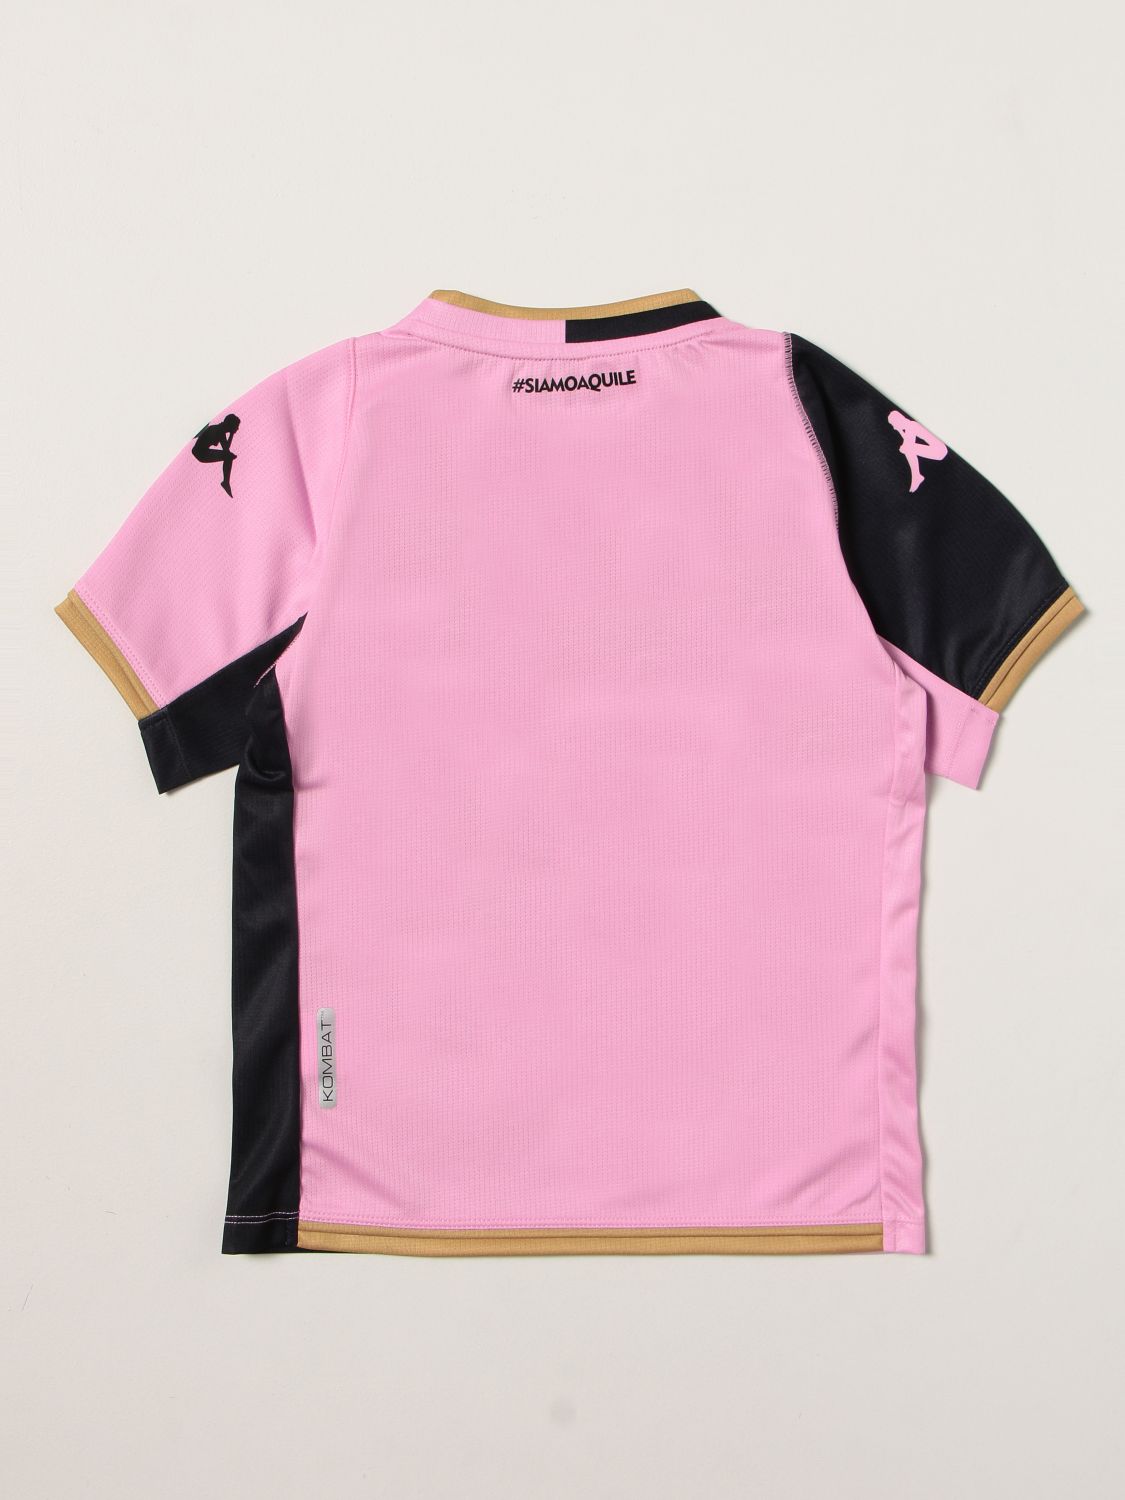 T-shirt Palermo: Maglia kombat 1st gara palermo 2021/22 - bambino rosa 2